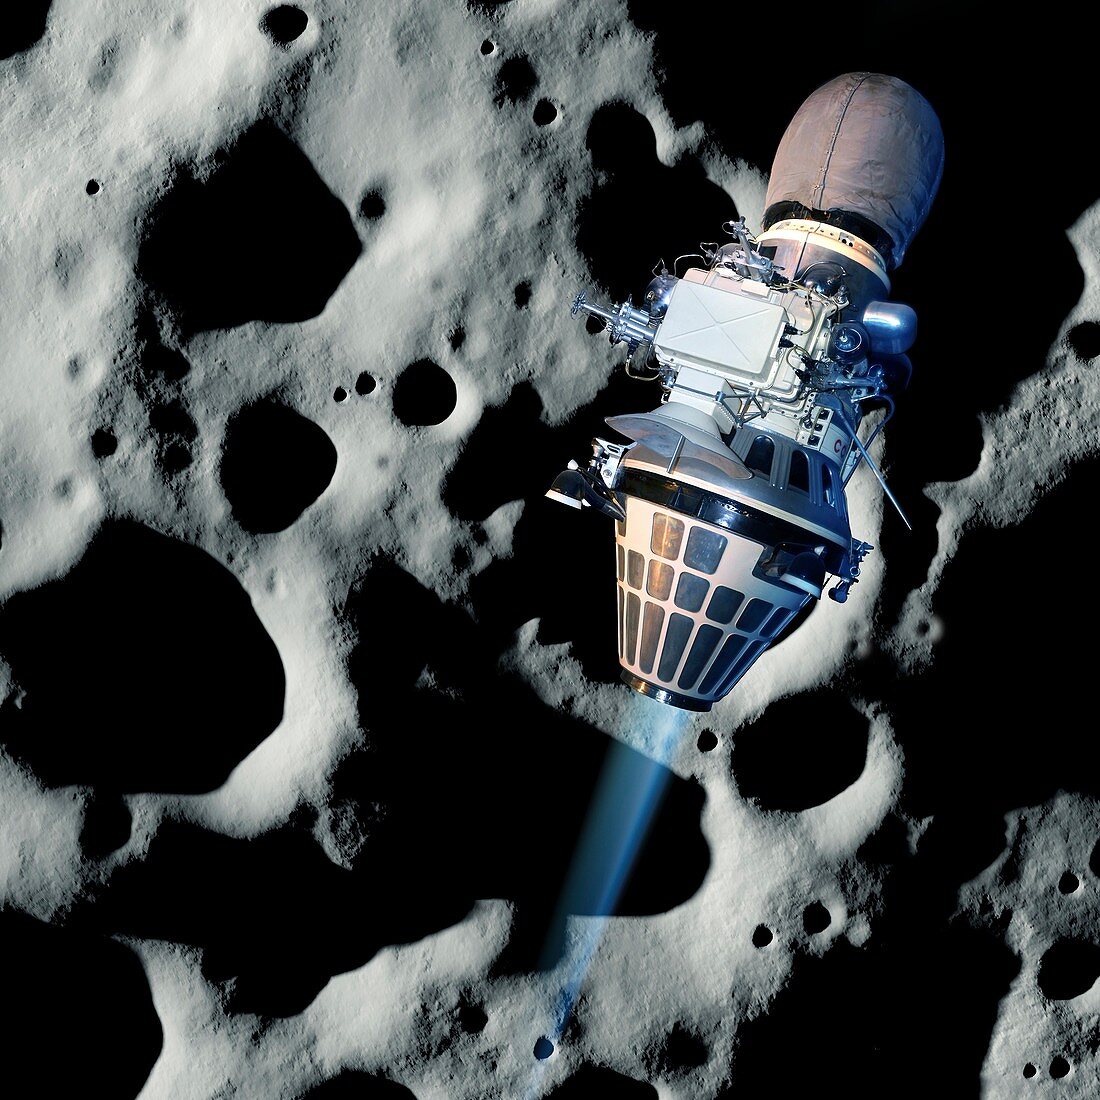 Luna 9 spacecraft approaching lunar surface, composite image